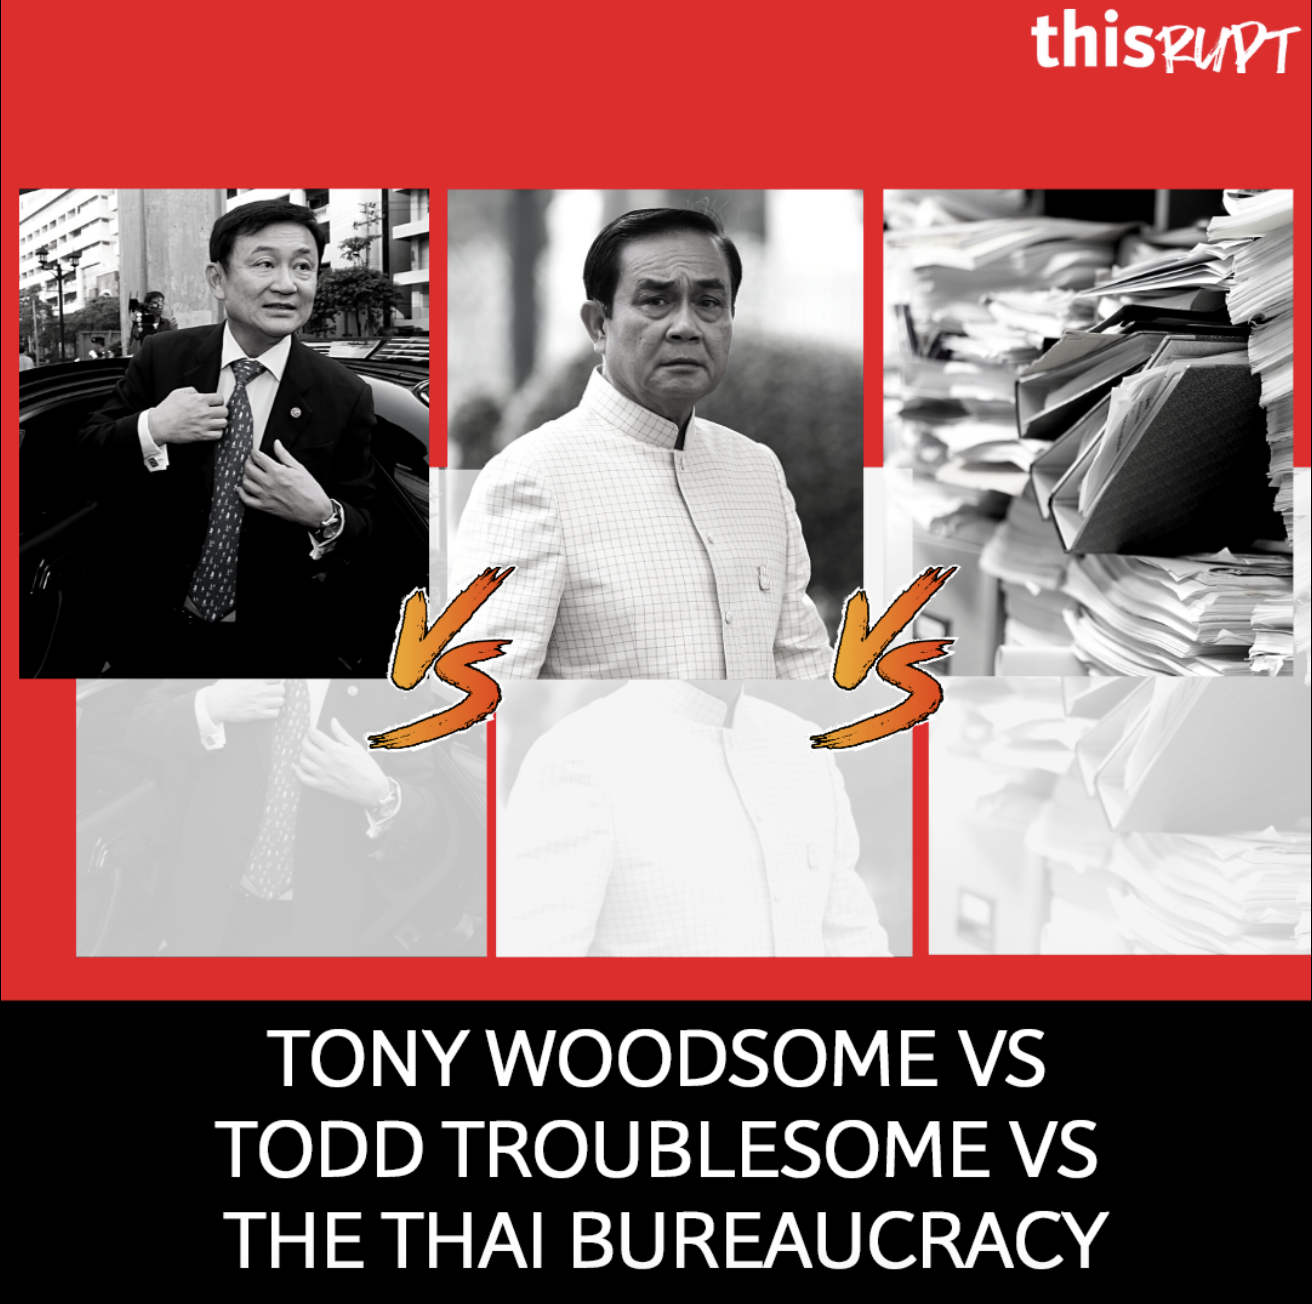 Tony Woodsome VS Todd Troublesome VS the Thai bureaucracy